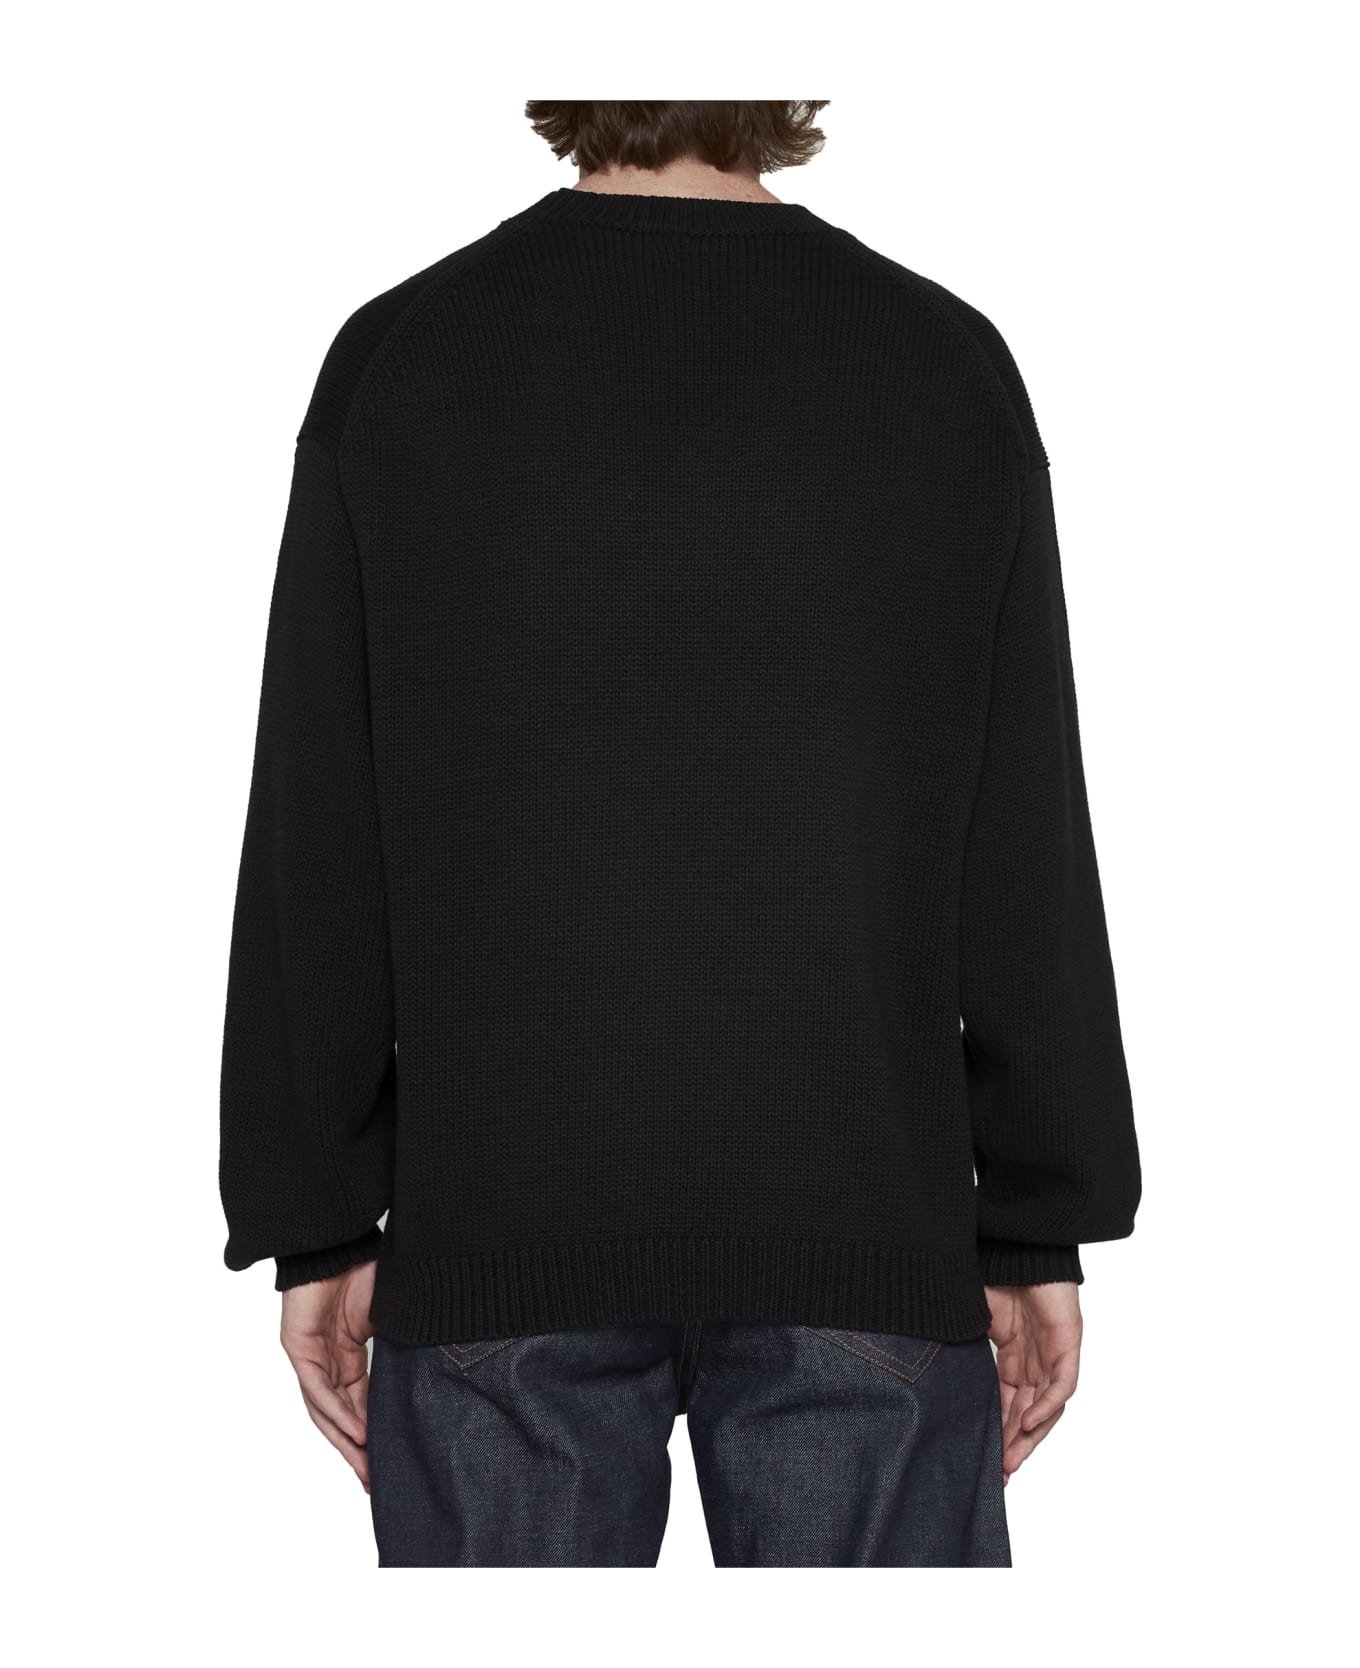 Kenzo ' Paris' Sweater - Black ニットウェア